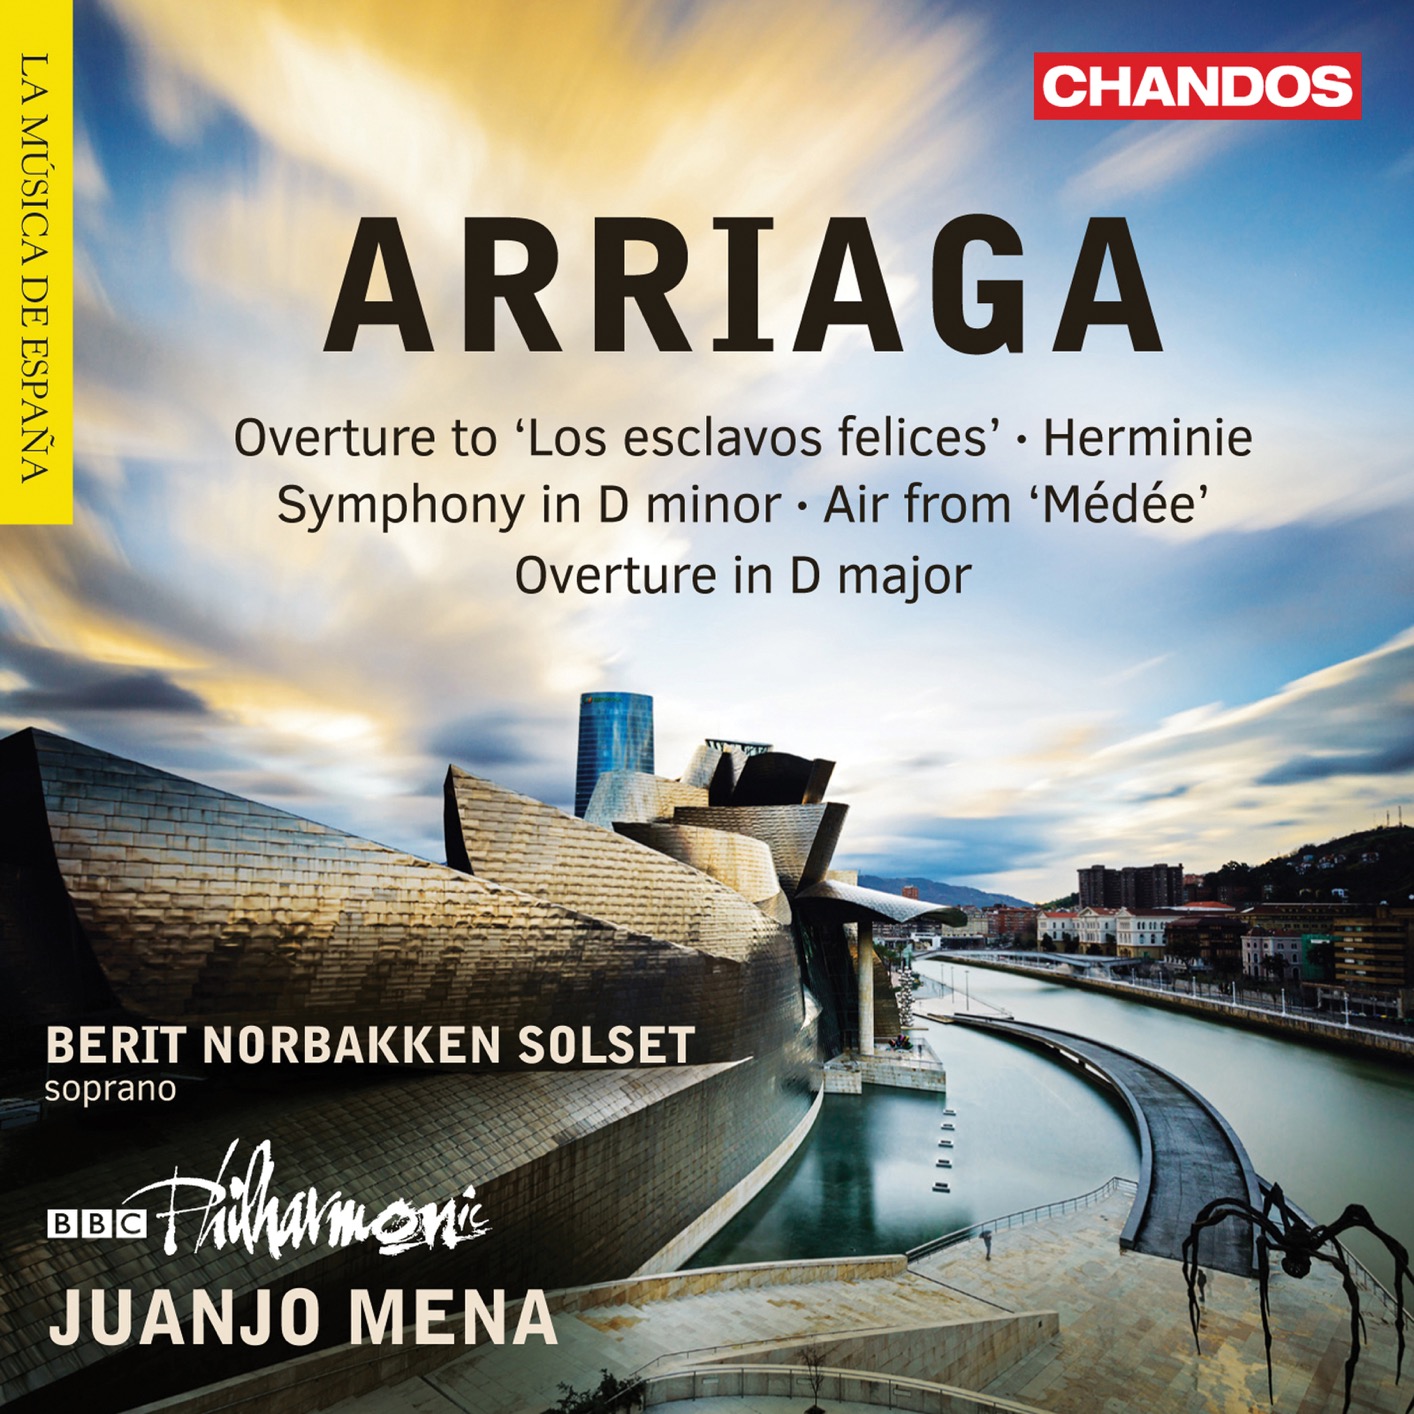 Berit Norbakken Solset, BBC Philharmonic & Juanjo Mena - Arriaga: Overtures, Herminie & Other Works (2019) [FLAC 24bit/96kHz]